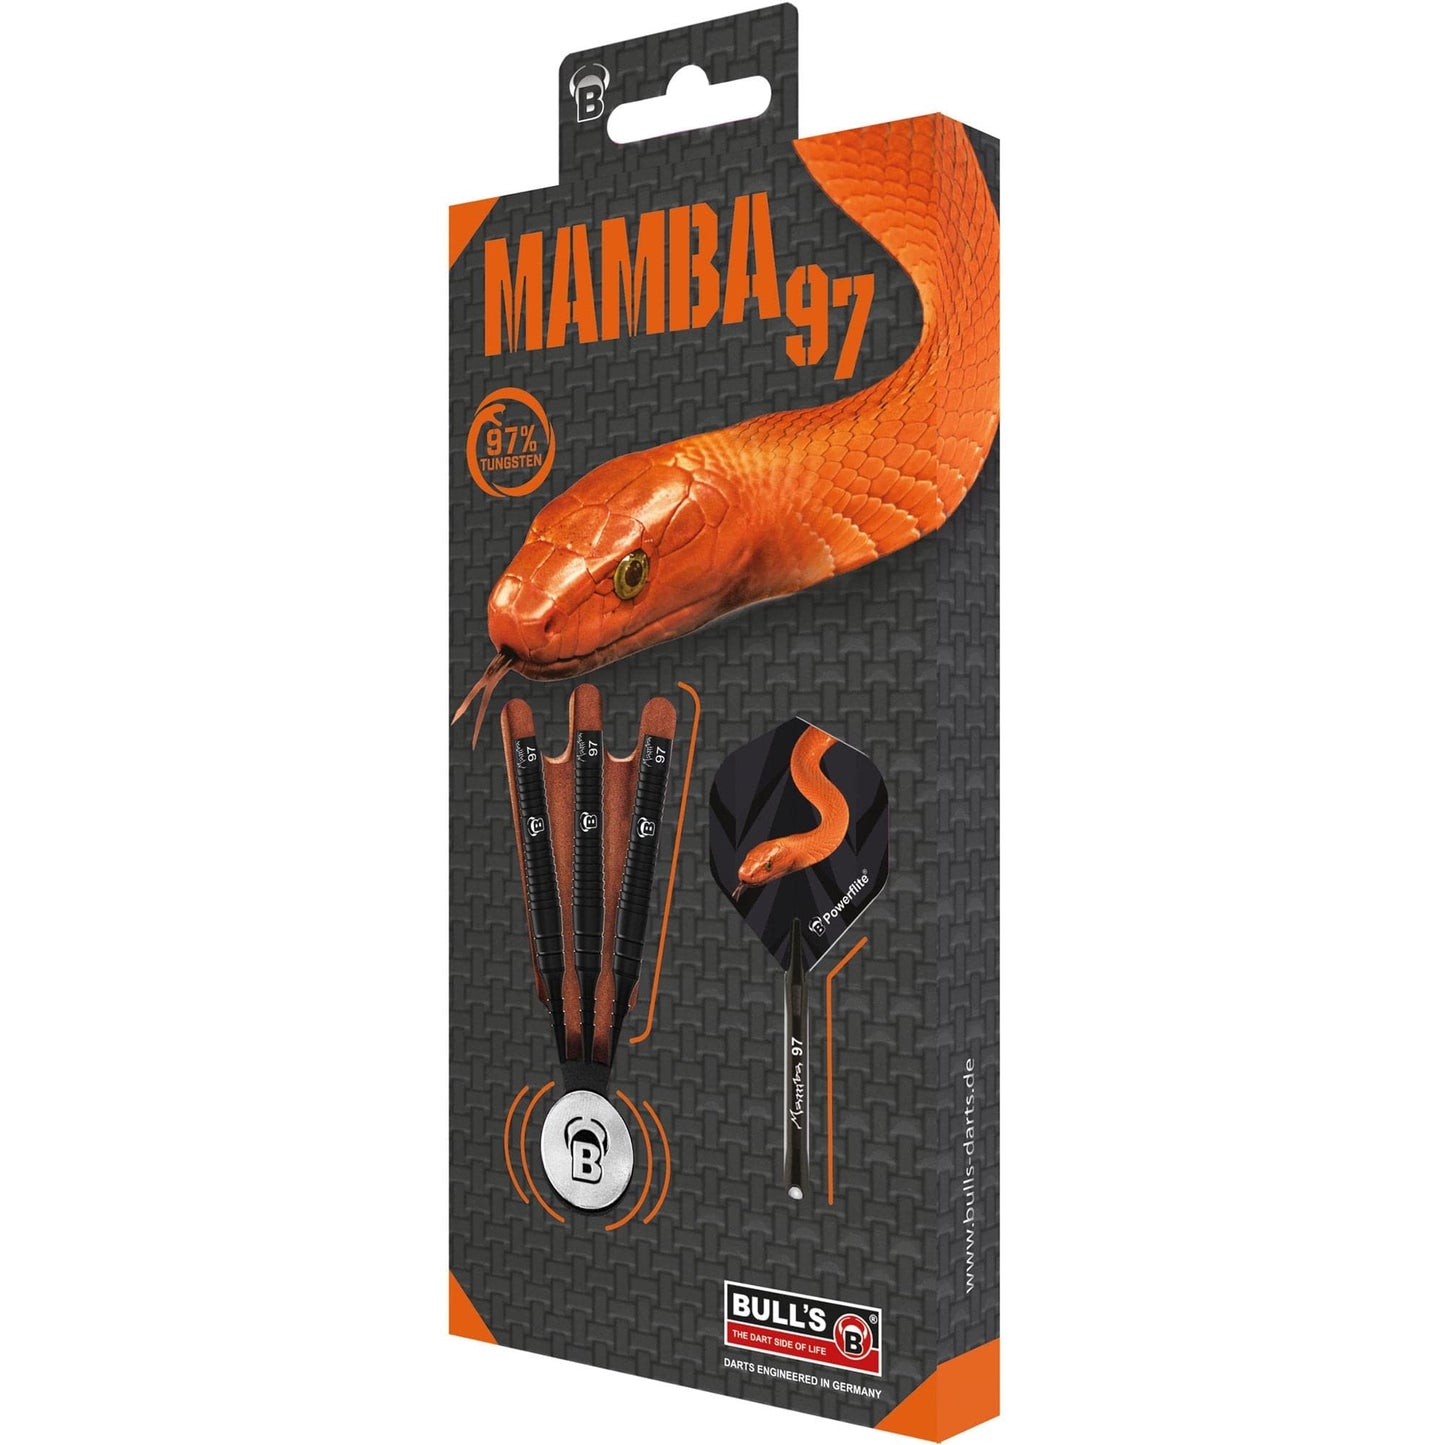 BULL'S Mamba 97 Darts - Soft Tip - M4 - Black Titanium